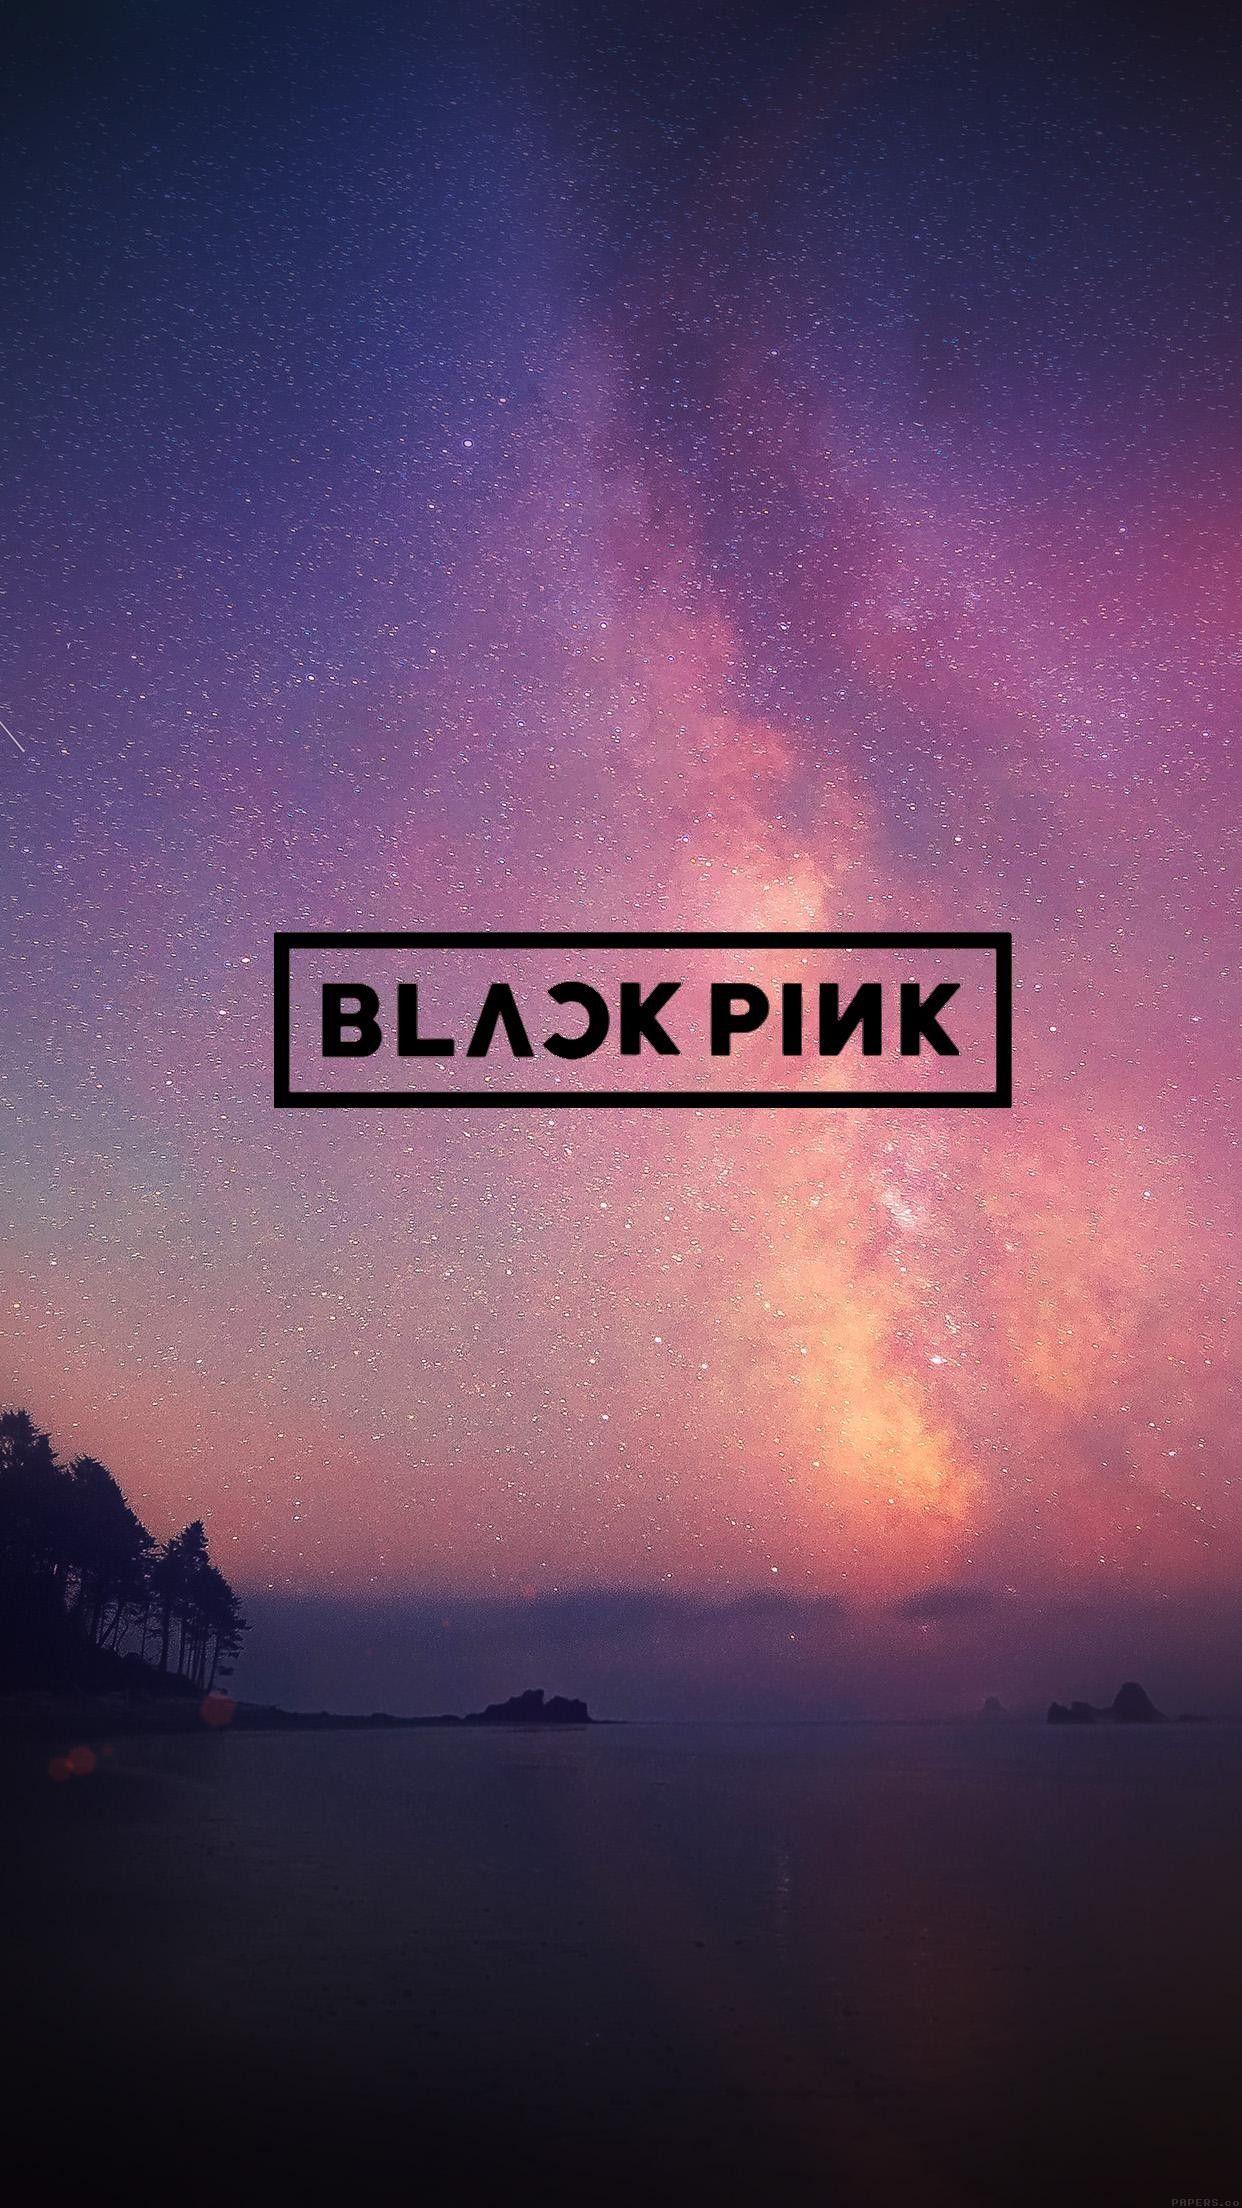 BlackPink Logo Phone Wallpaper. Blackpink